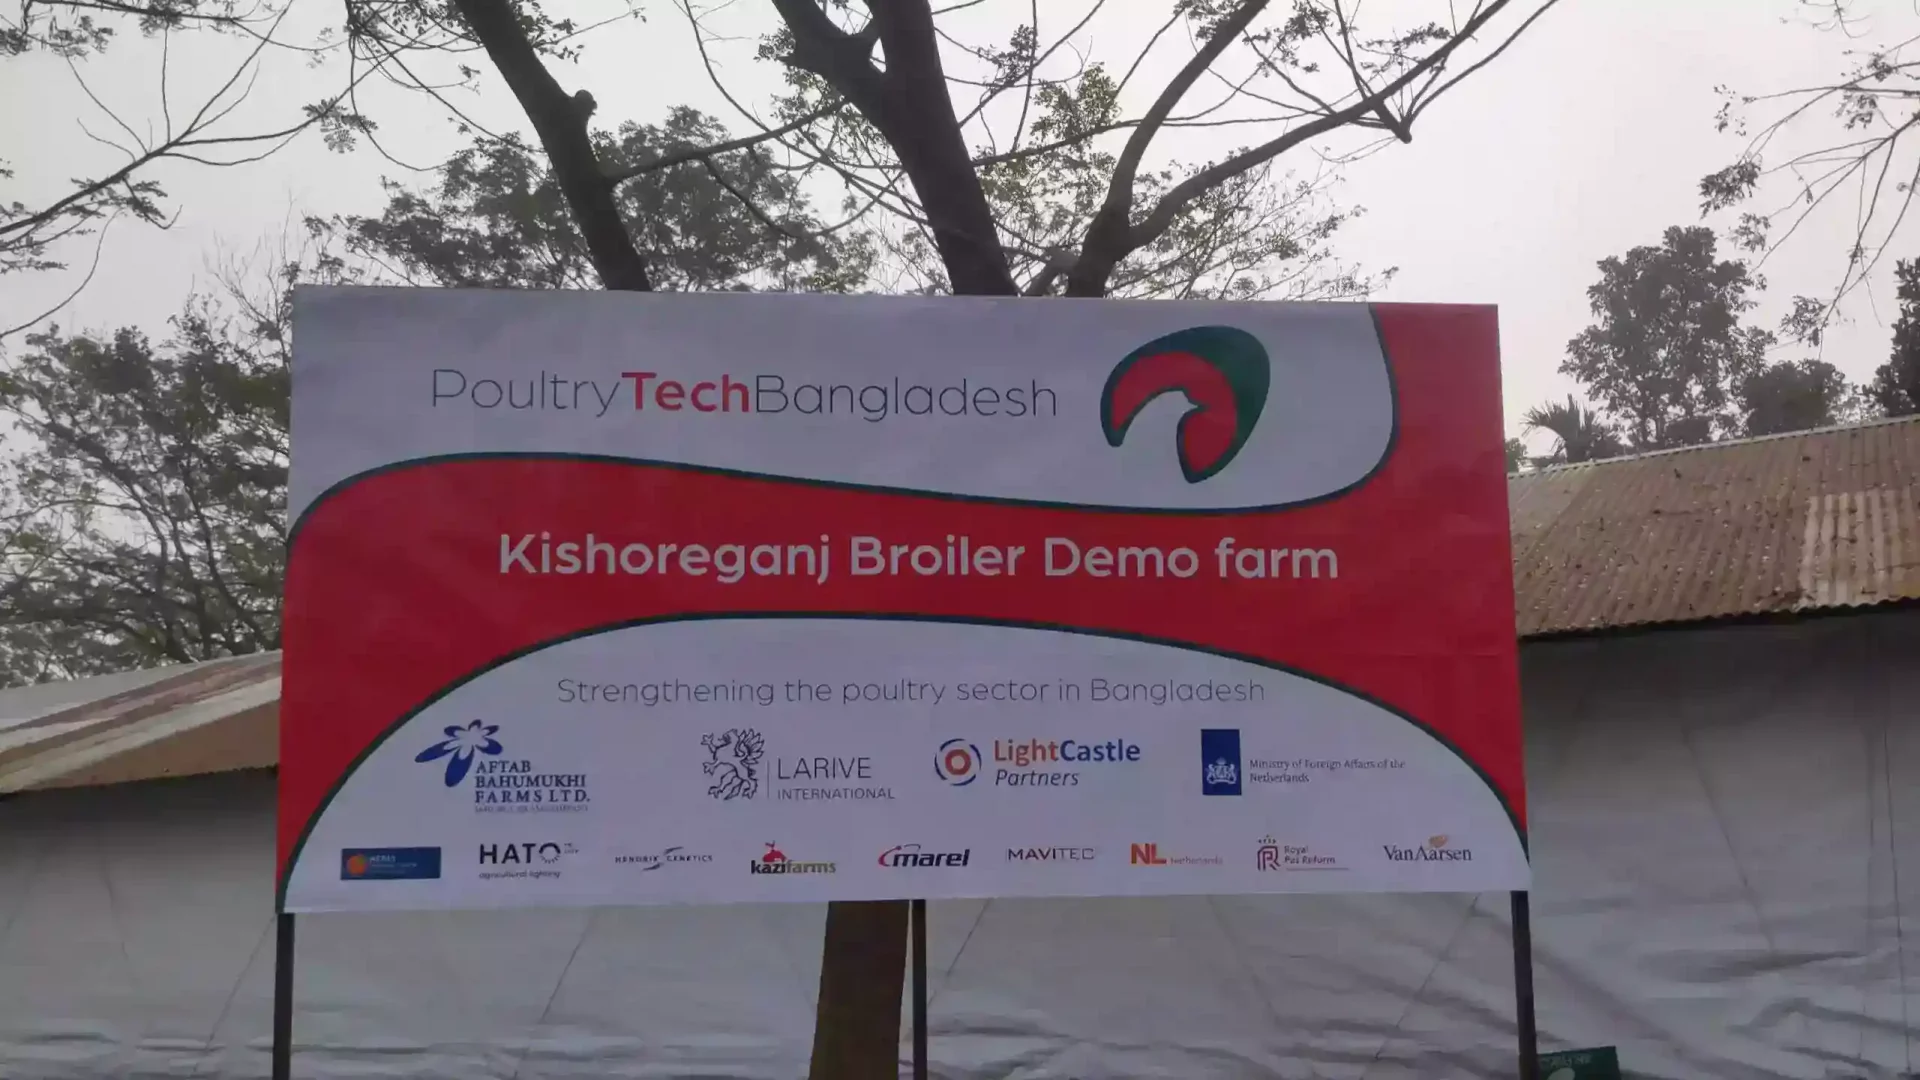 Dutch Delegates Visit PoultyTechBangladesh’s Demonstration Poultry Farm